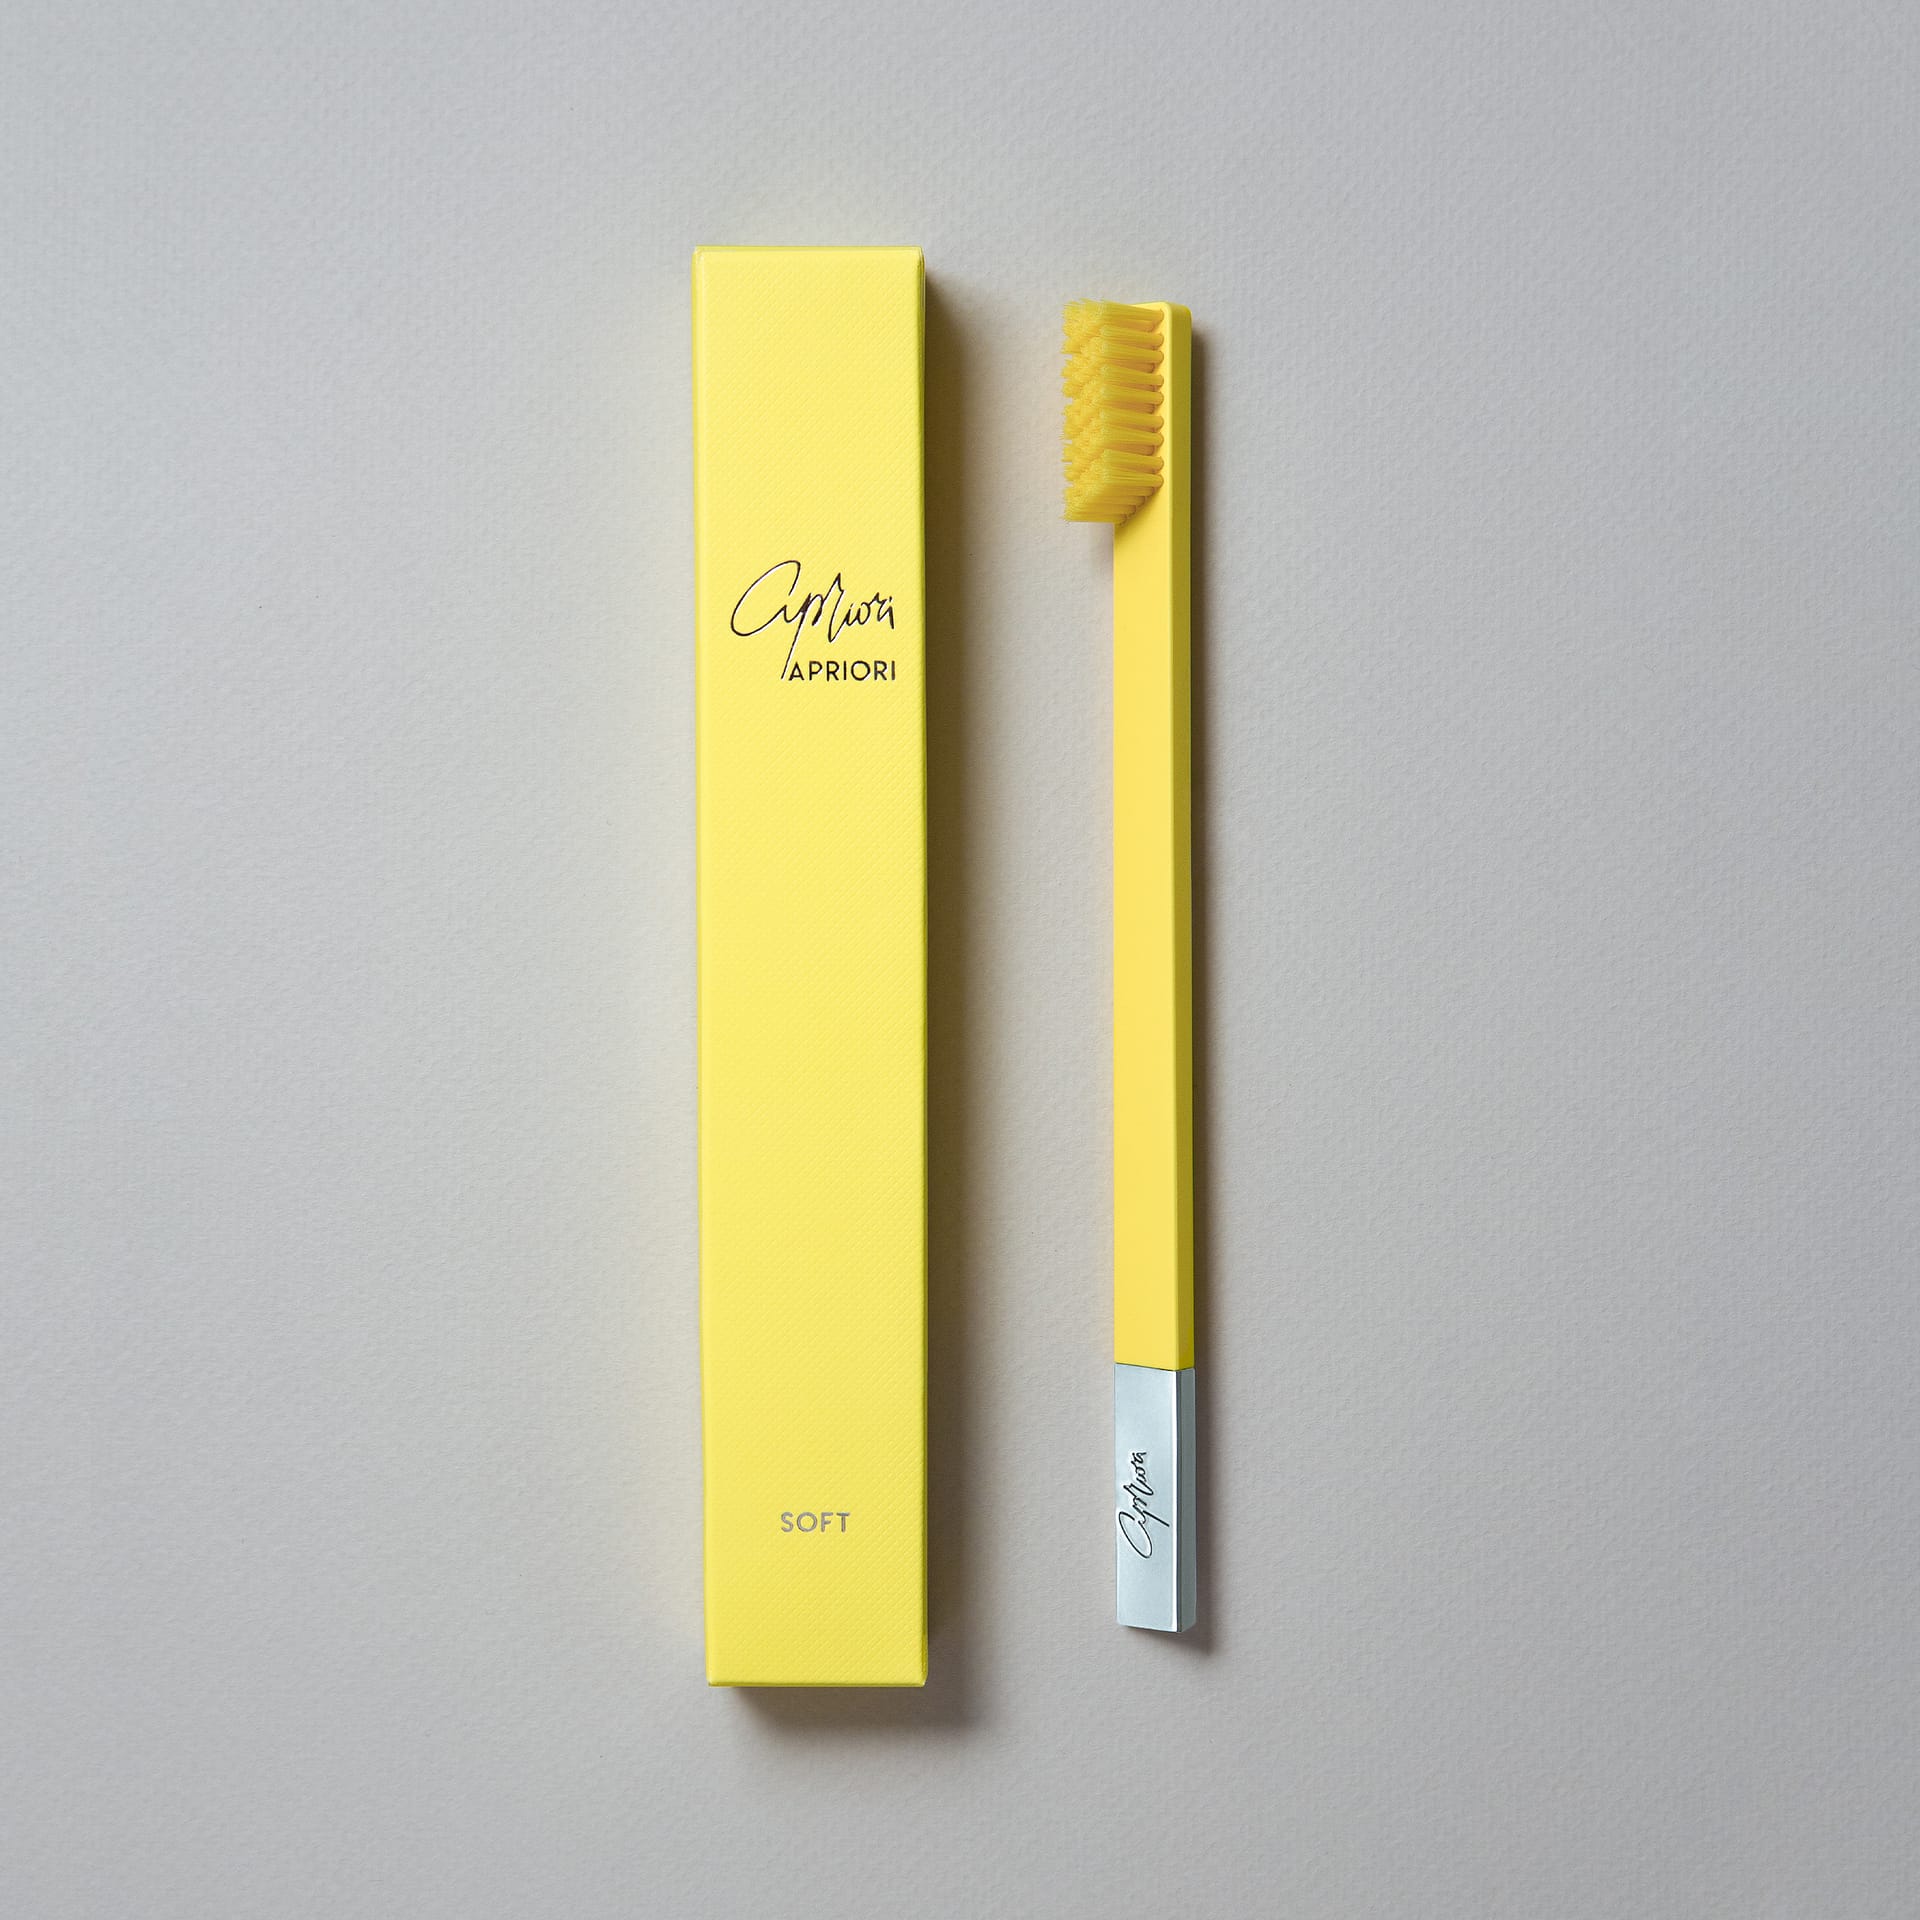 slim-by-apriori-sunflower-yellow-silver-toothbrush-01